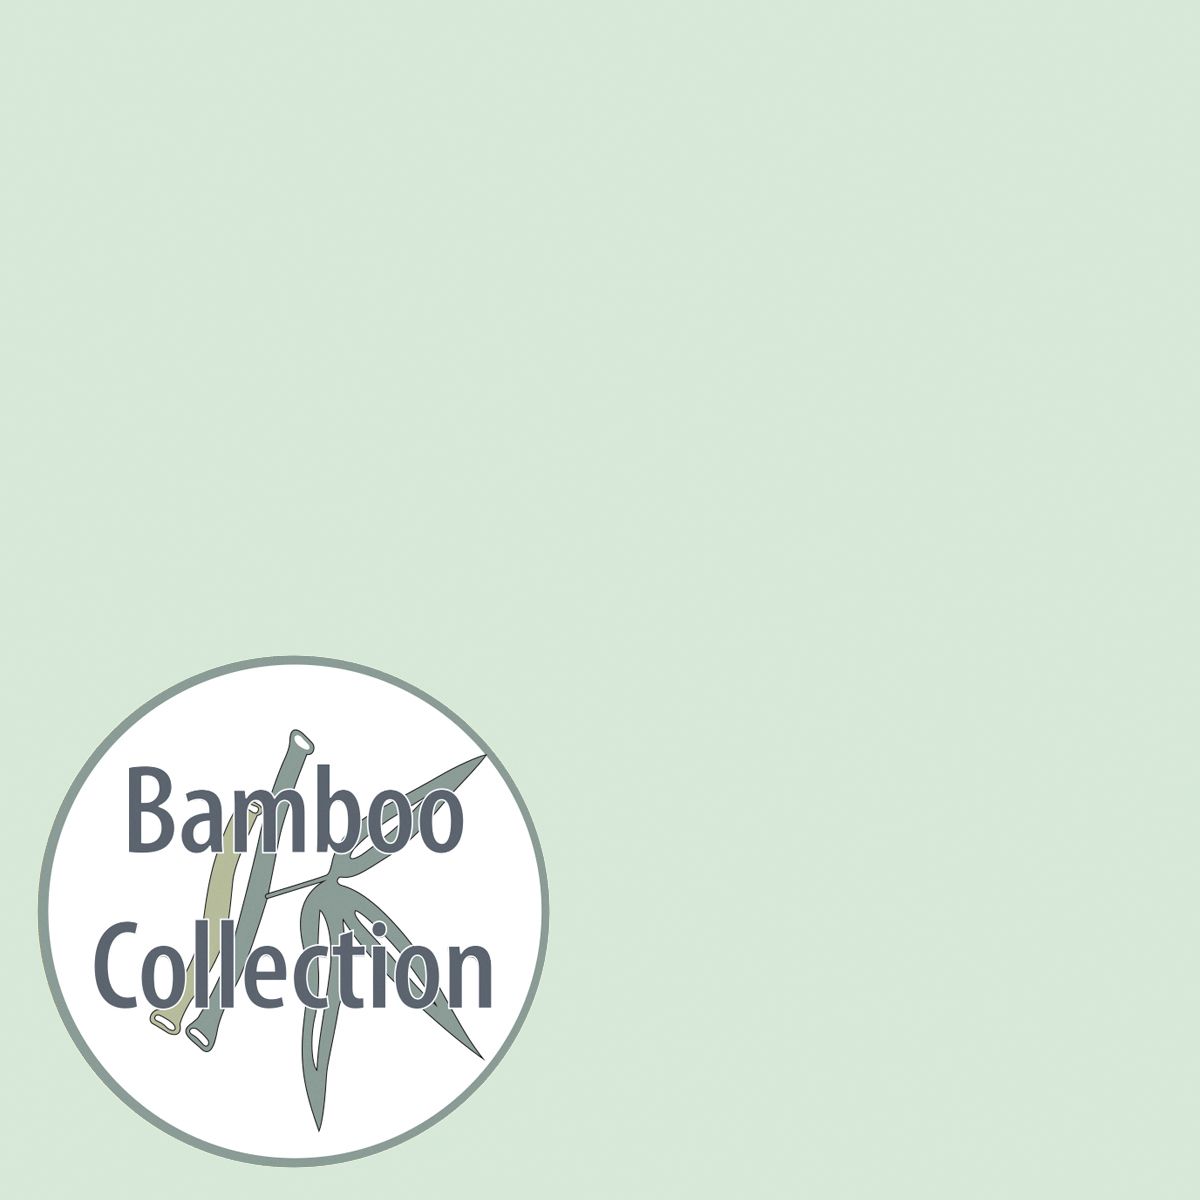 Stillkissen Theraline Das Original inkl. Bezug Bamboo Collection